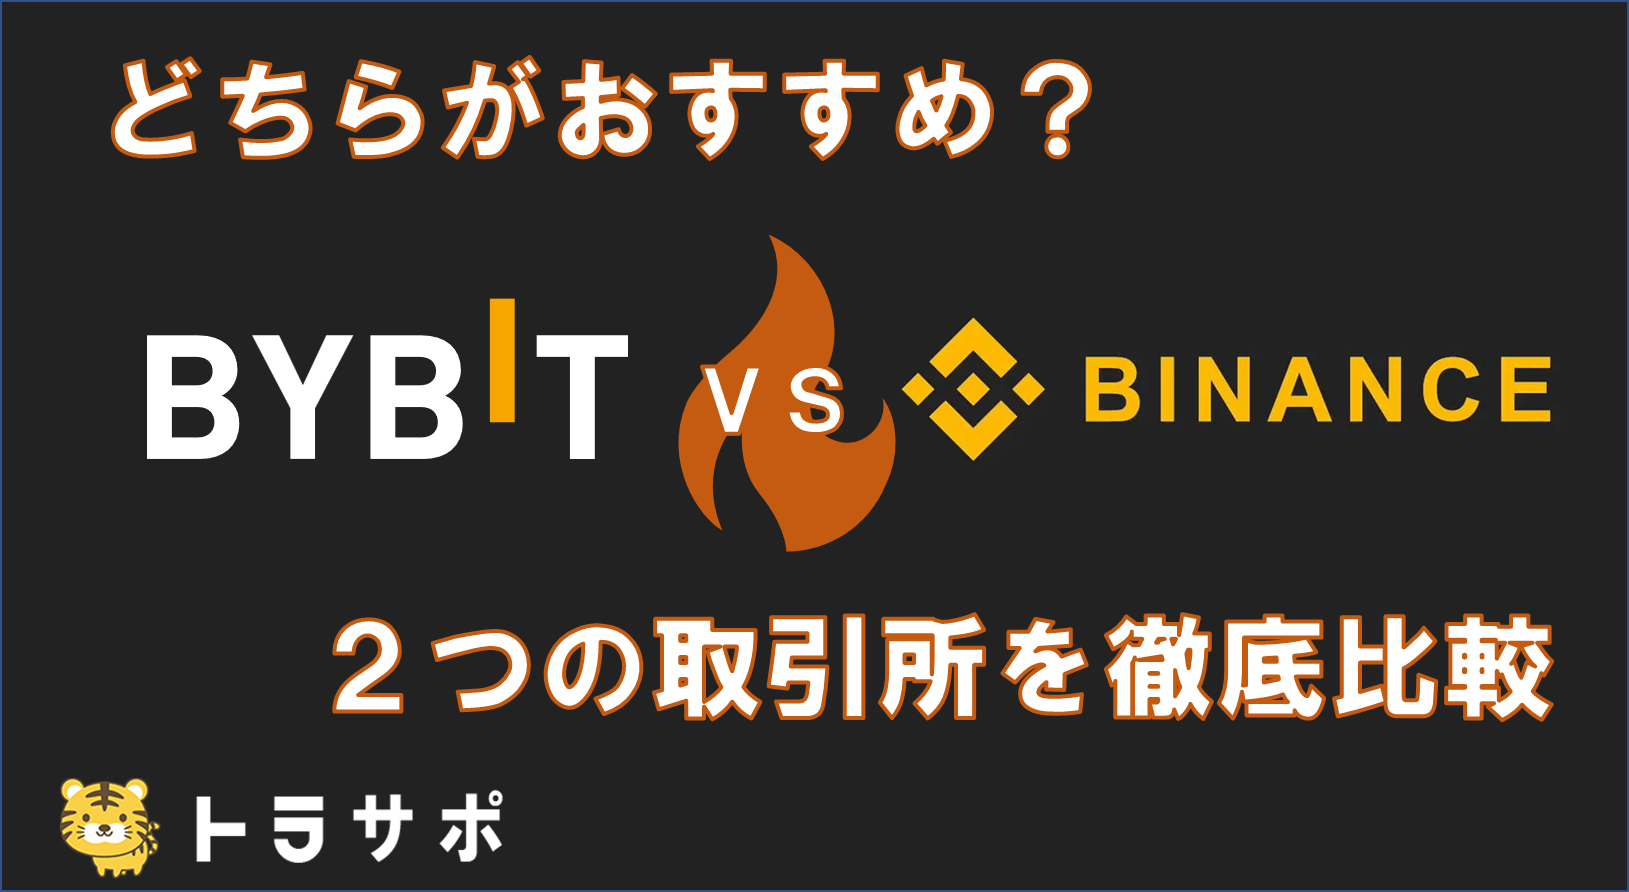 Bybit vs Binance｜どちらがおすすめ？2つの取引所を徹底比較